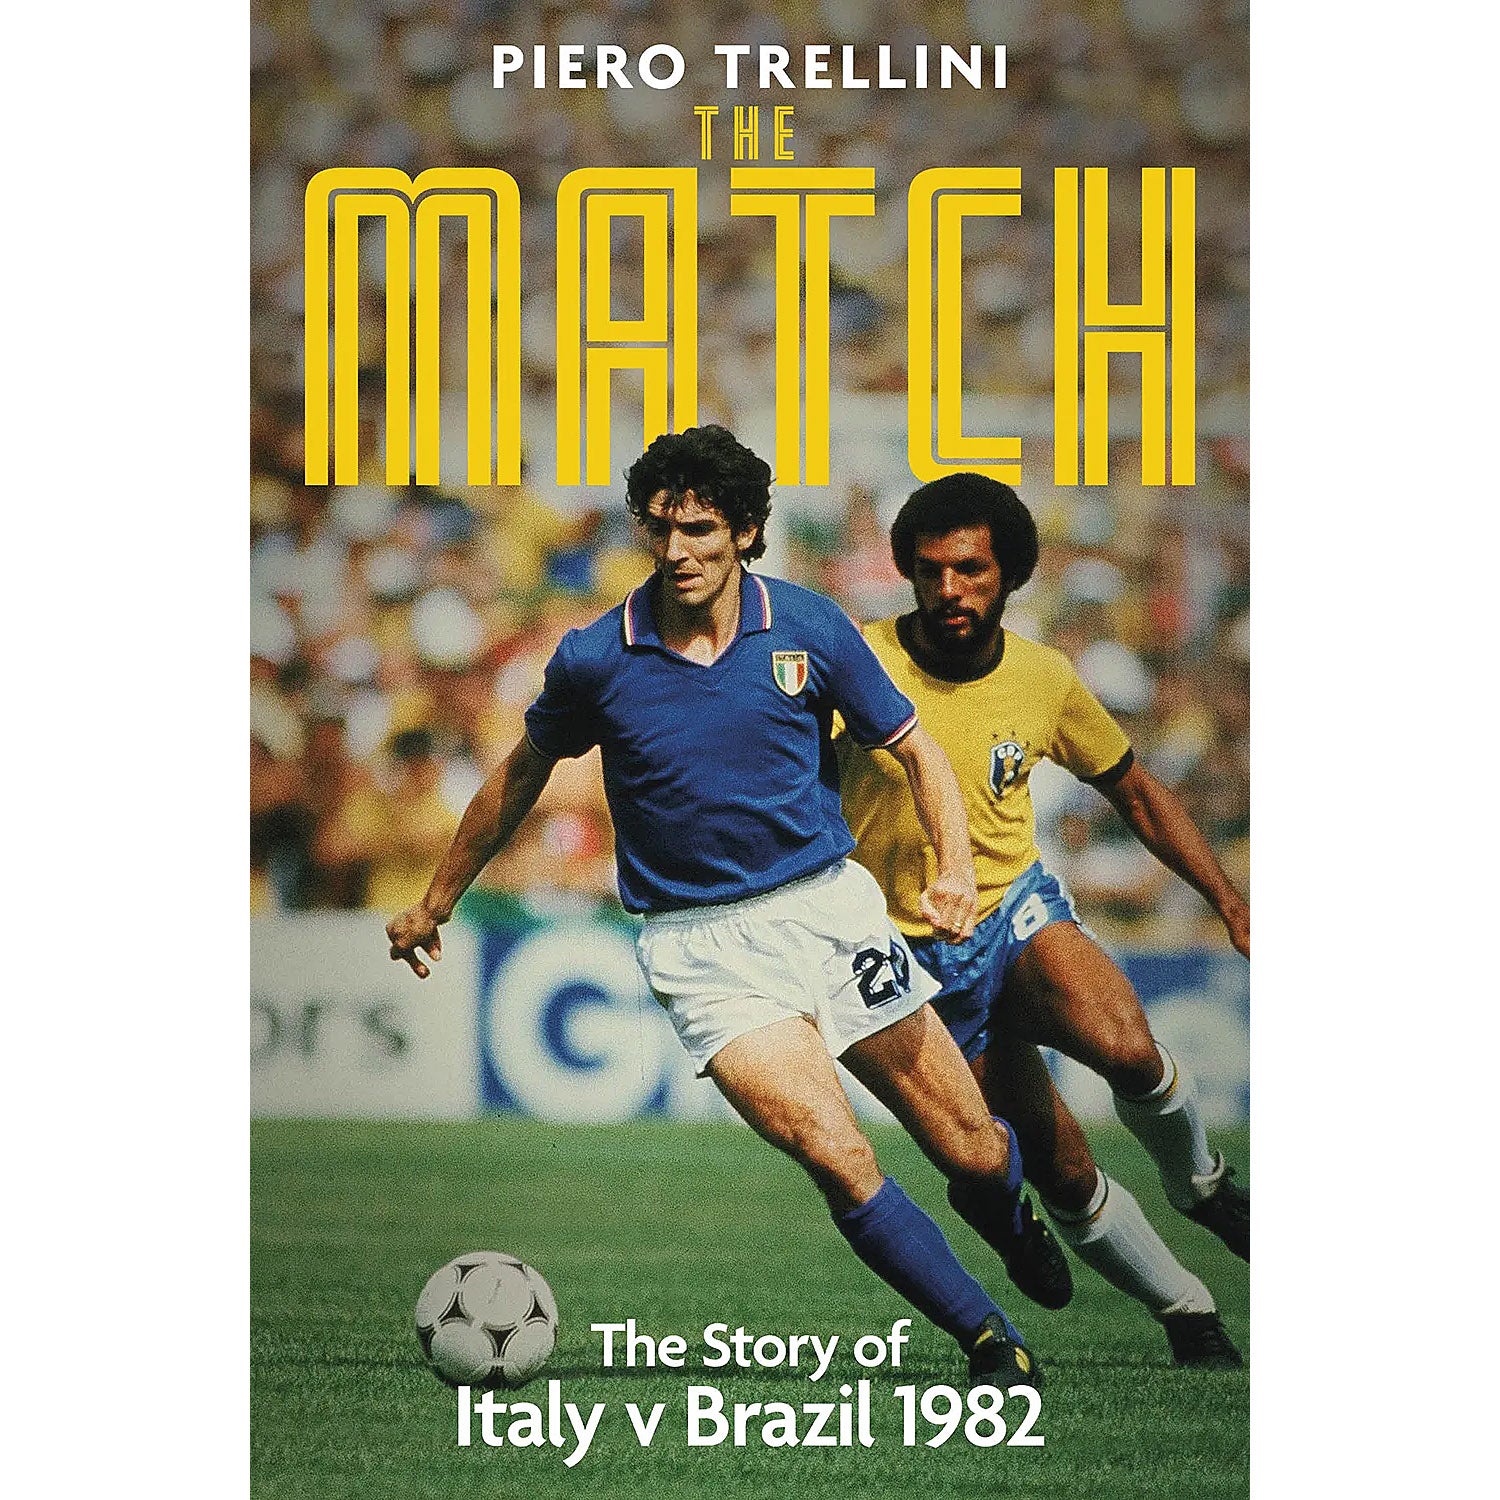 The Match – The Story of Italy v Brazil 1982